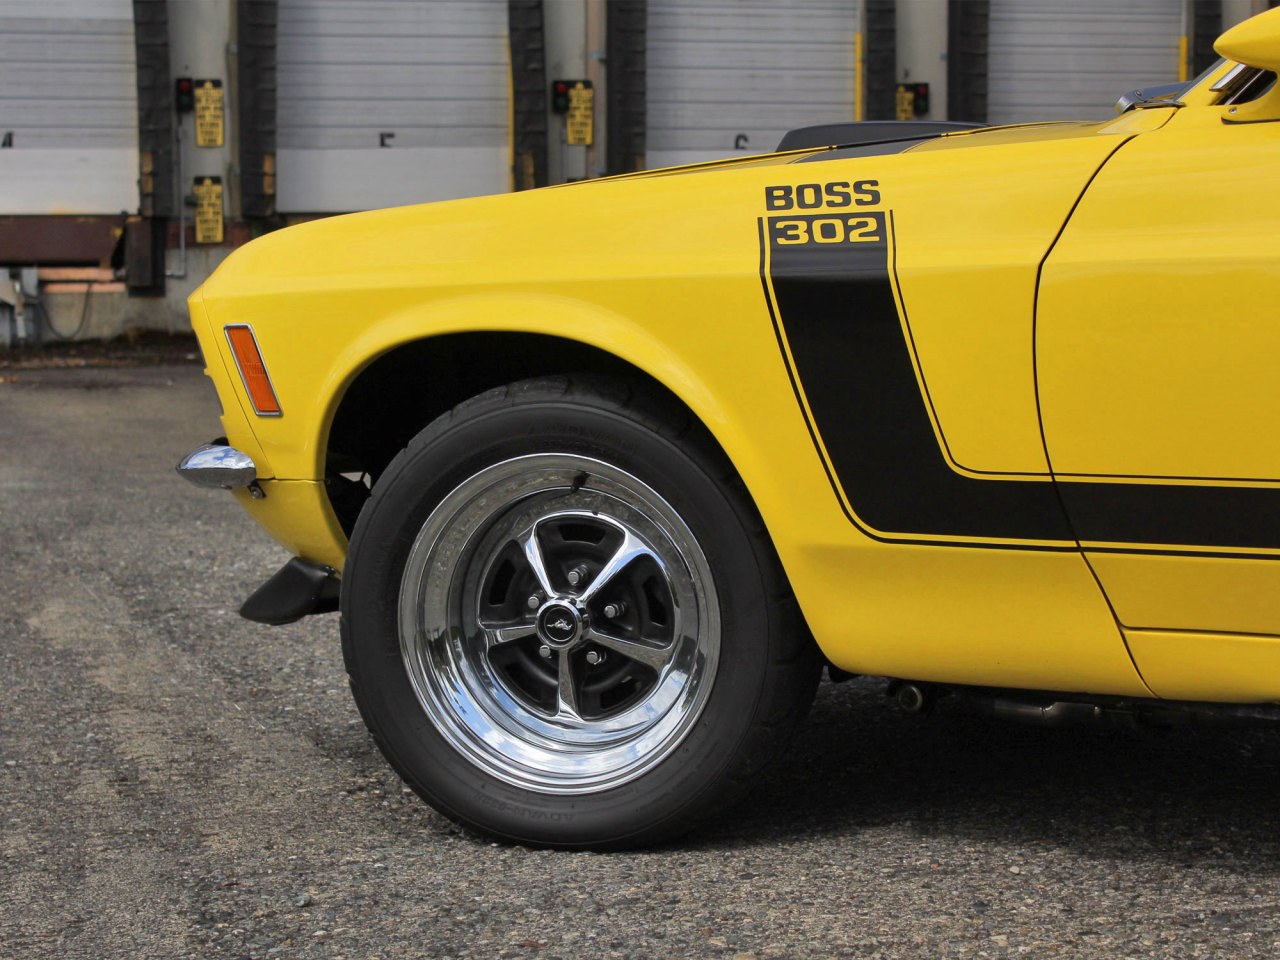 parkplaceltd:  1970 Ford Mustang Boss 302. http://bit.ly/10Dex6j